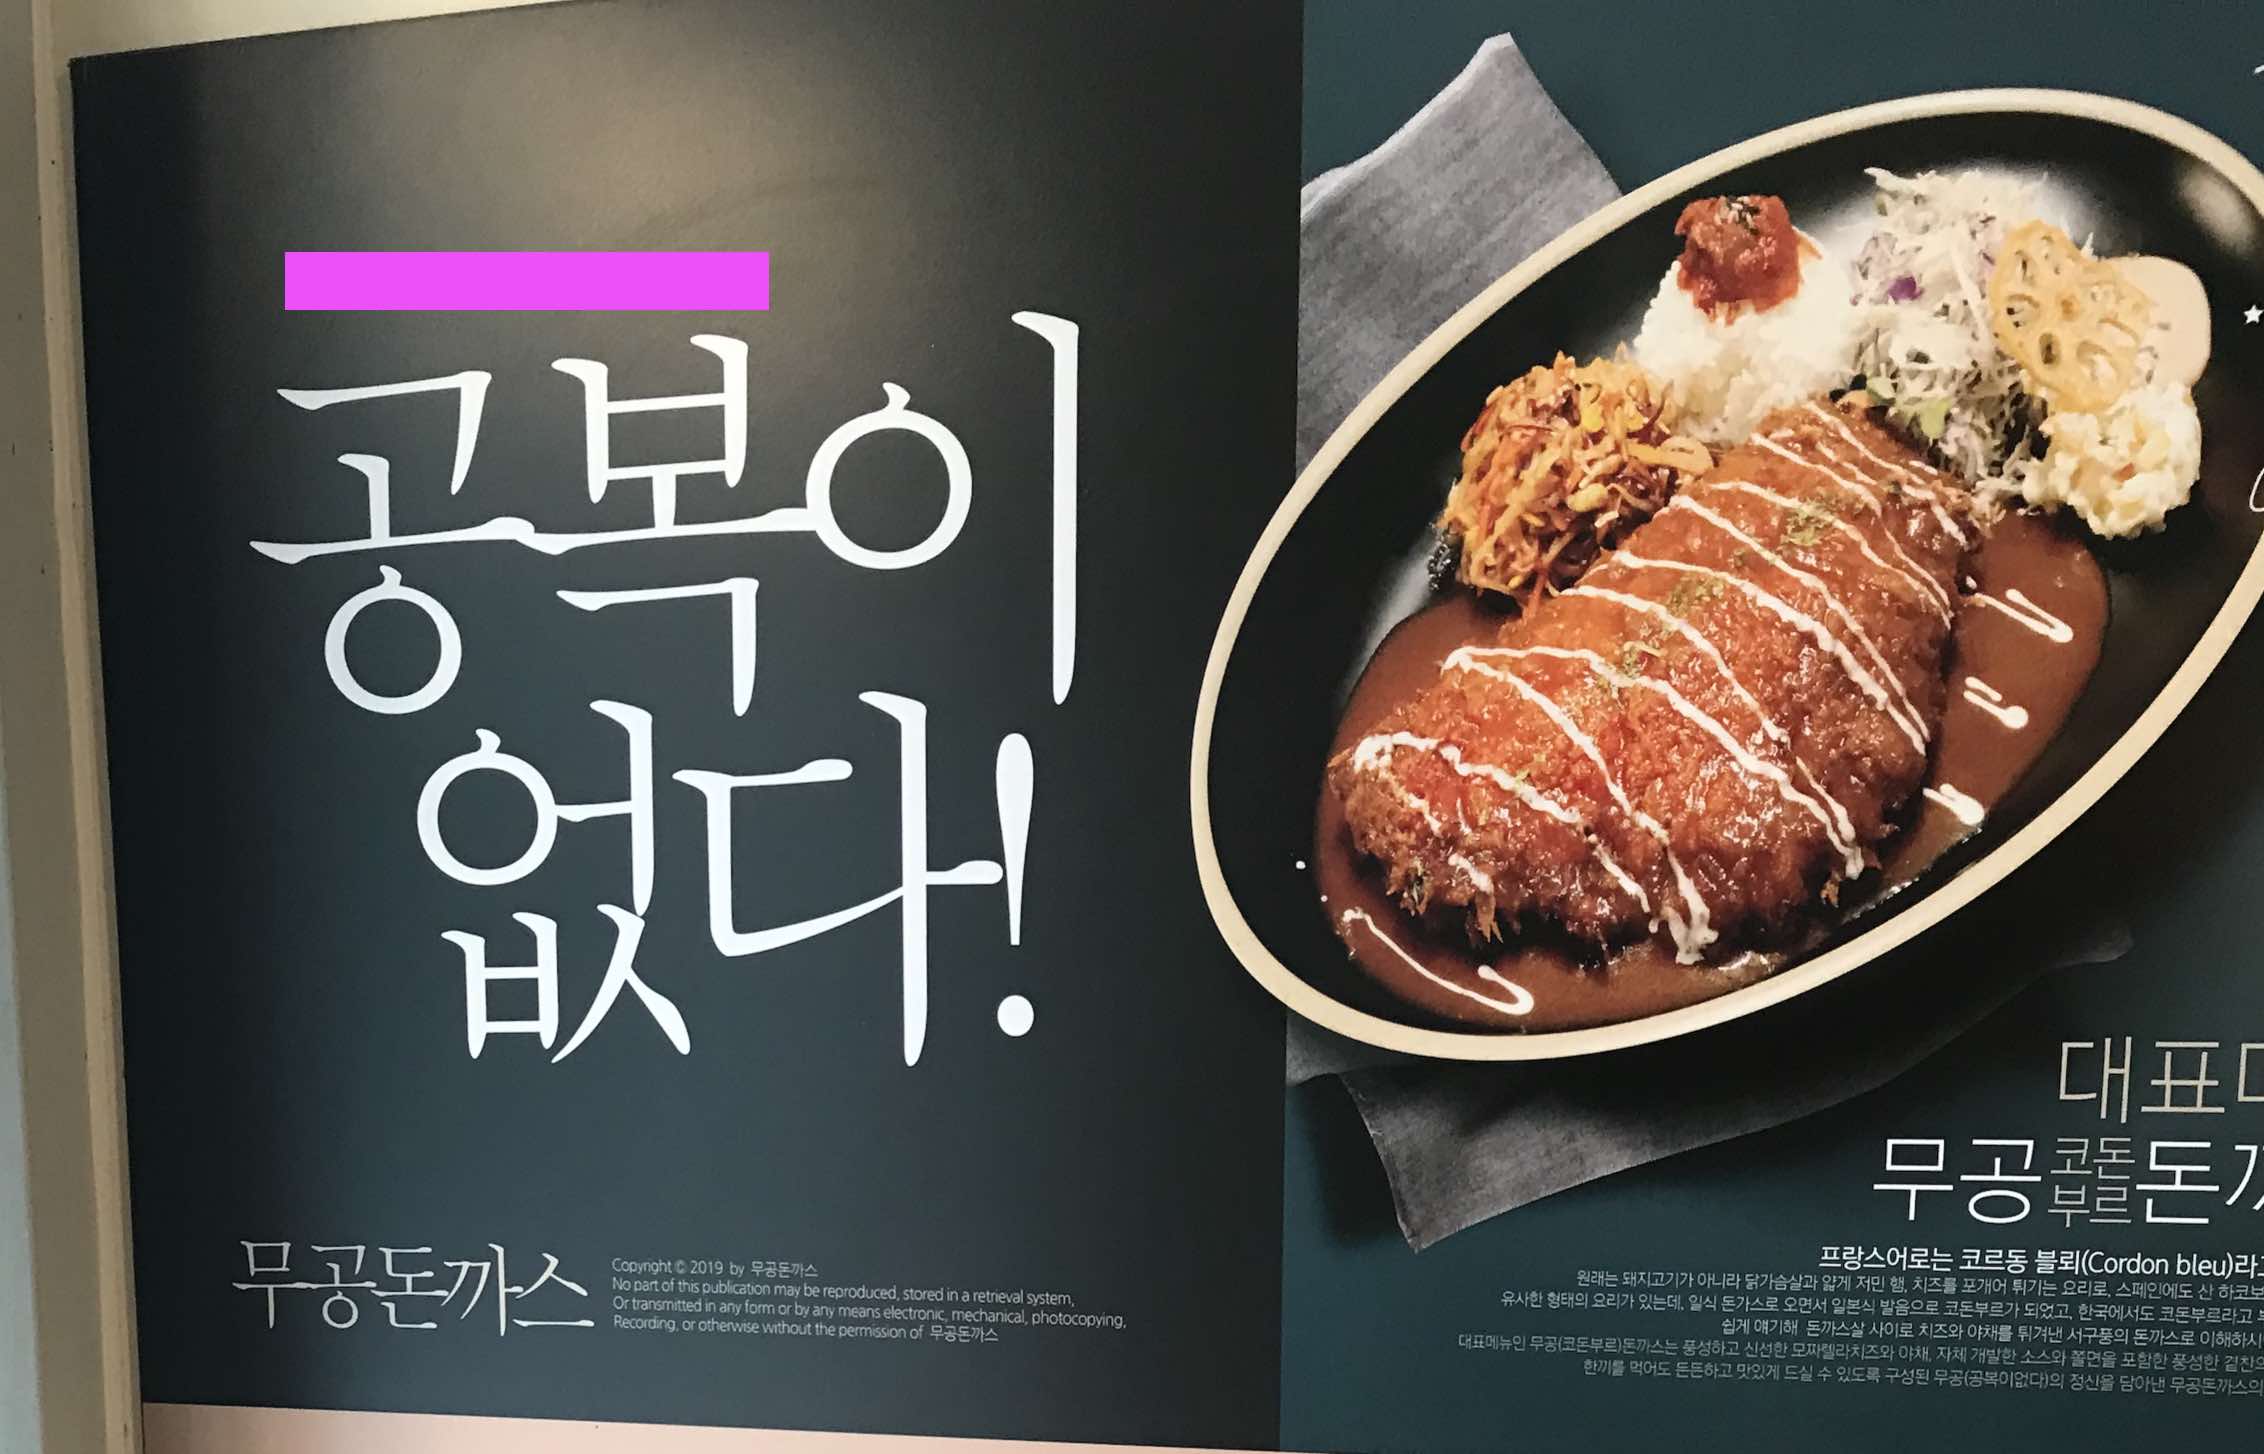 empty stomach in Korean is 공복